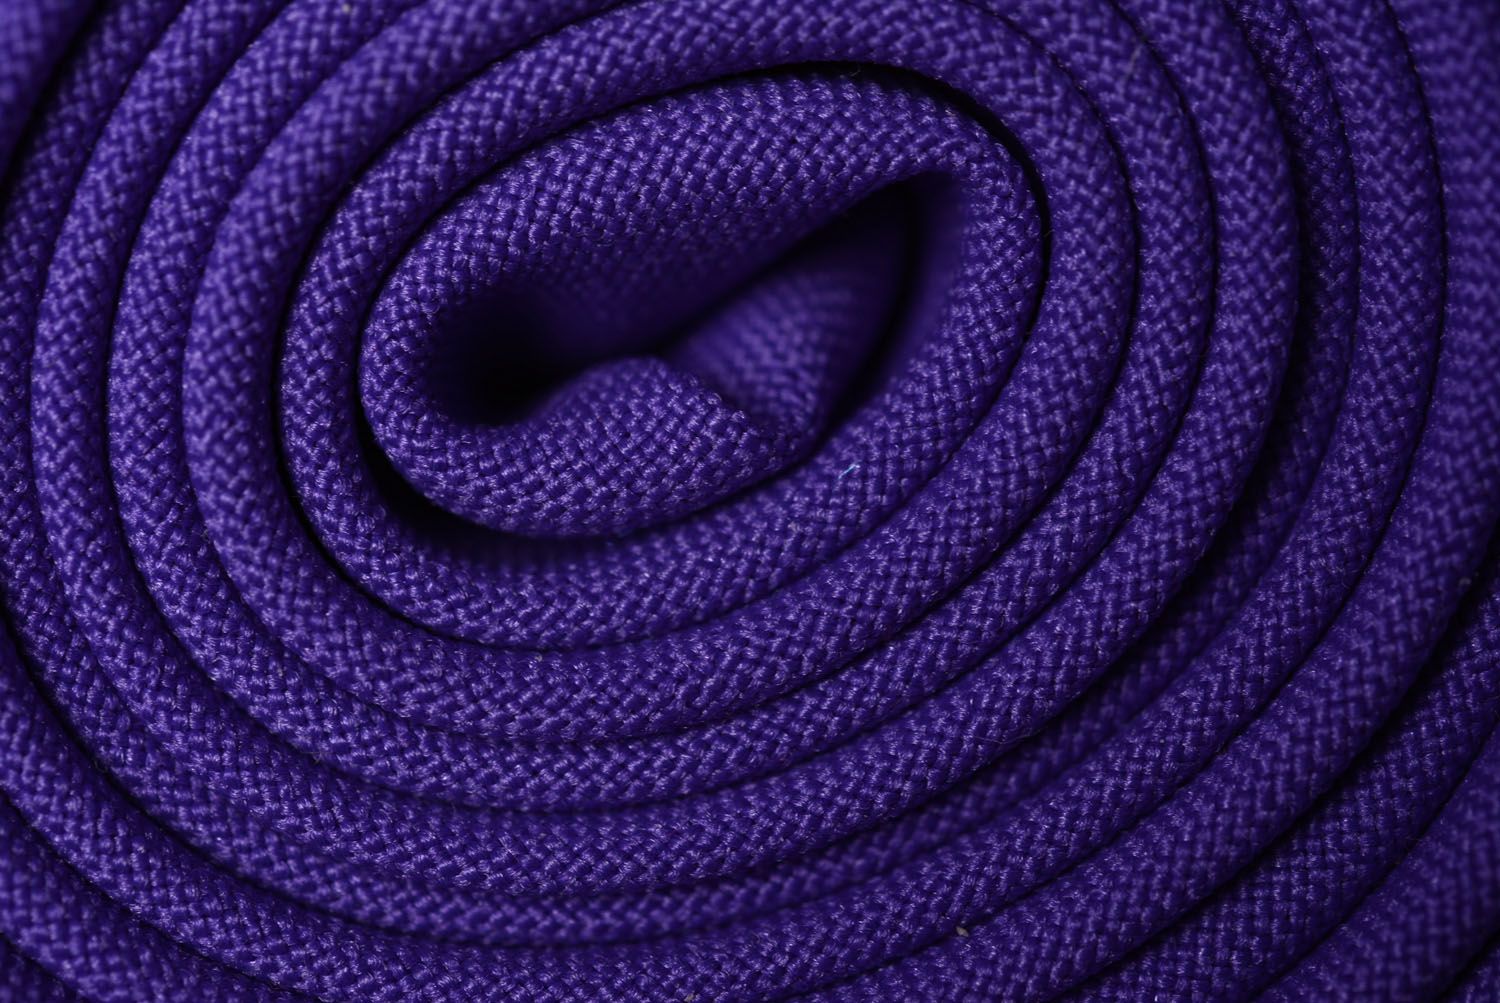 Cravate fine violette faite main  photo 5